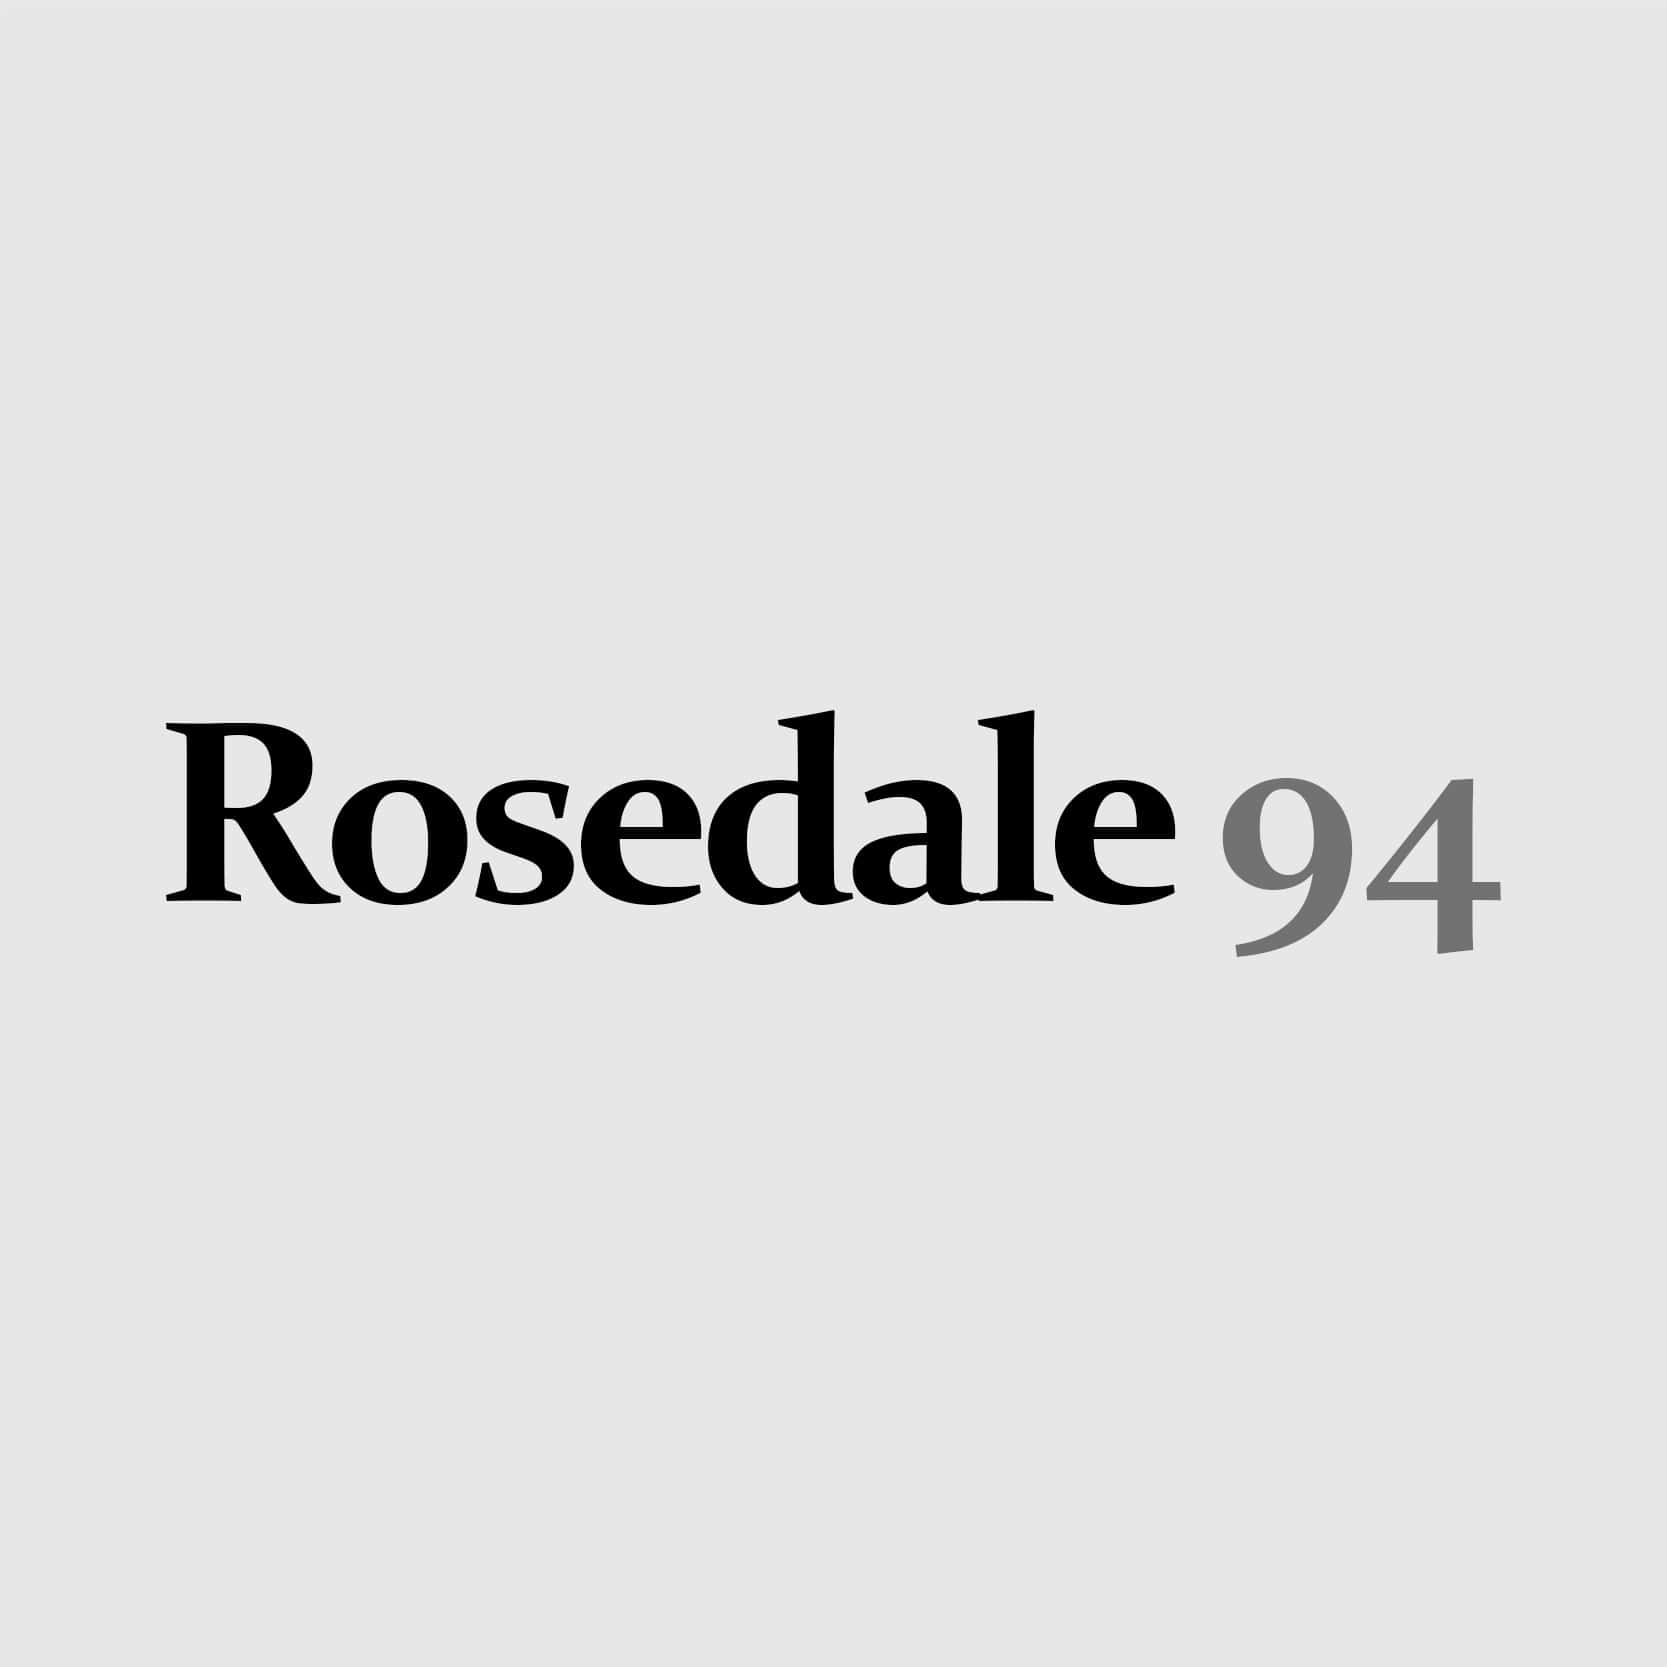 17-12 - Rosedale 94 - Content Cover_BW-min.jpg